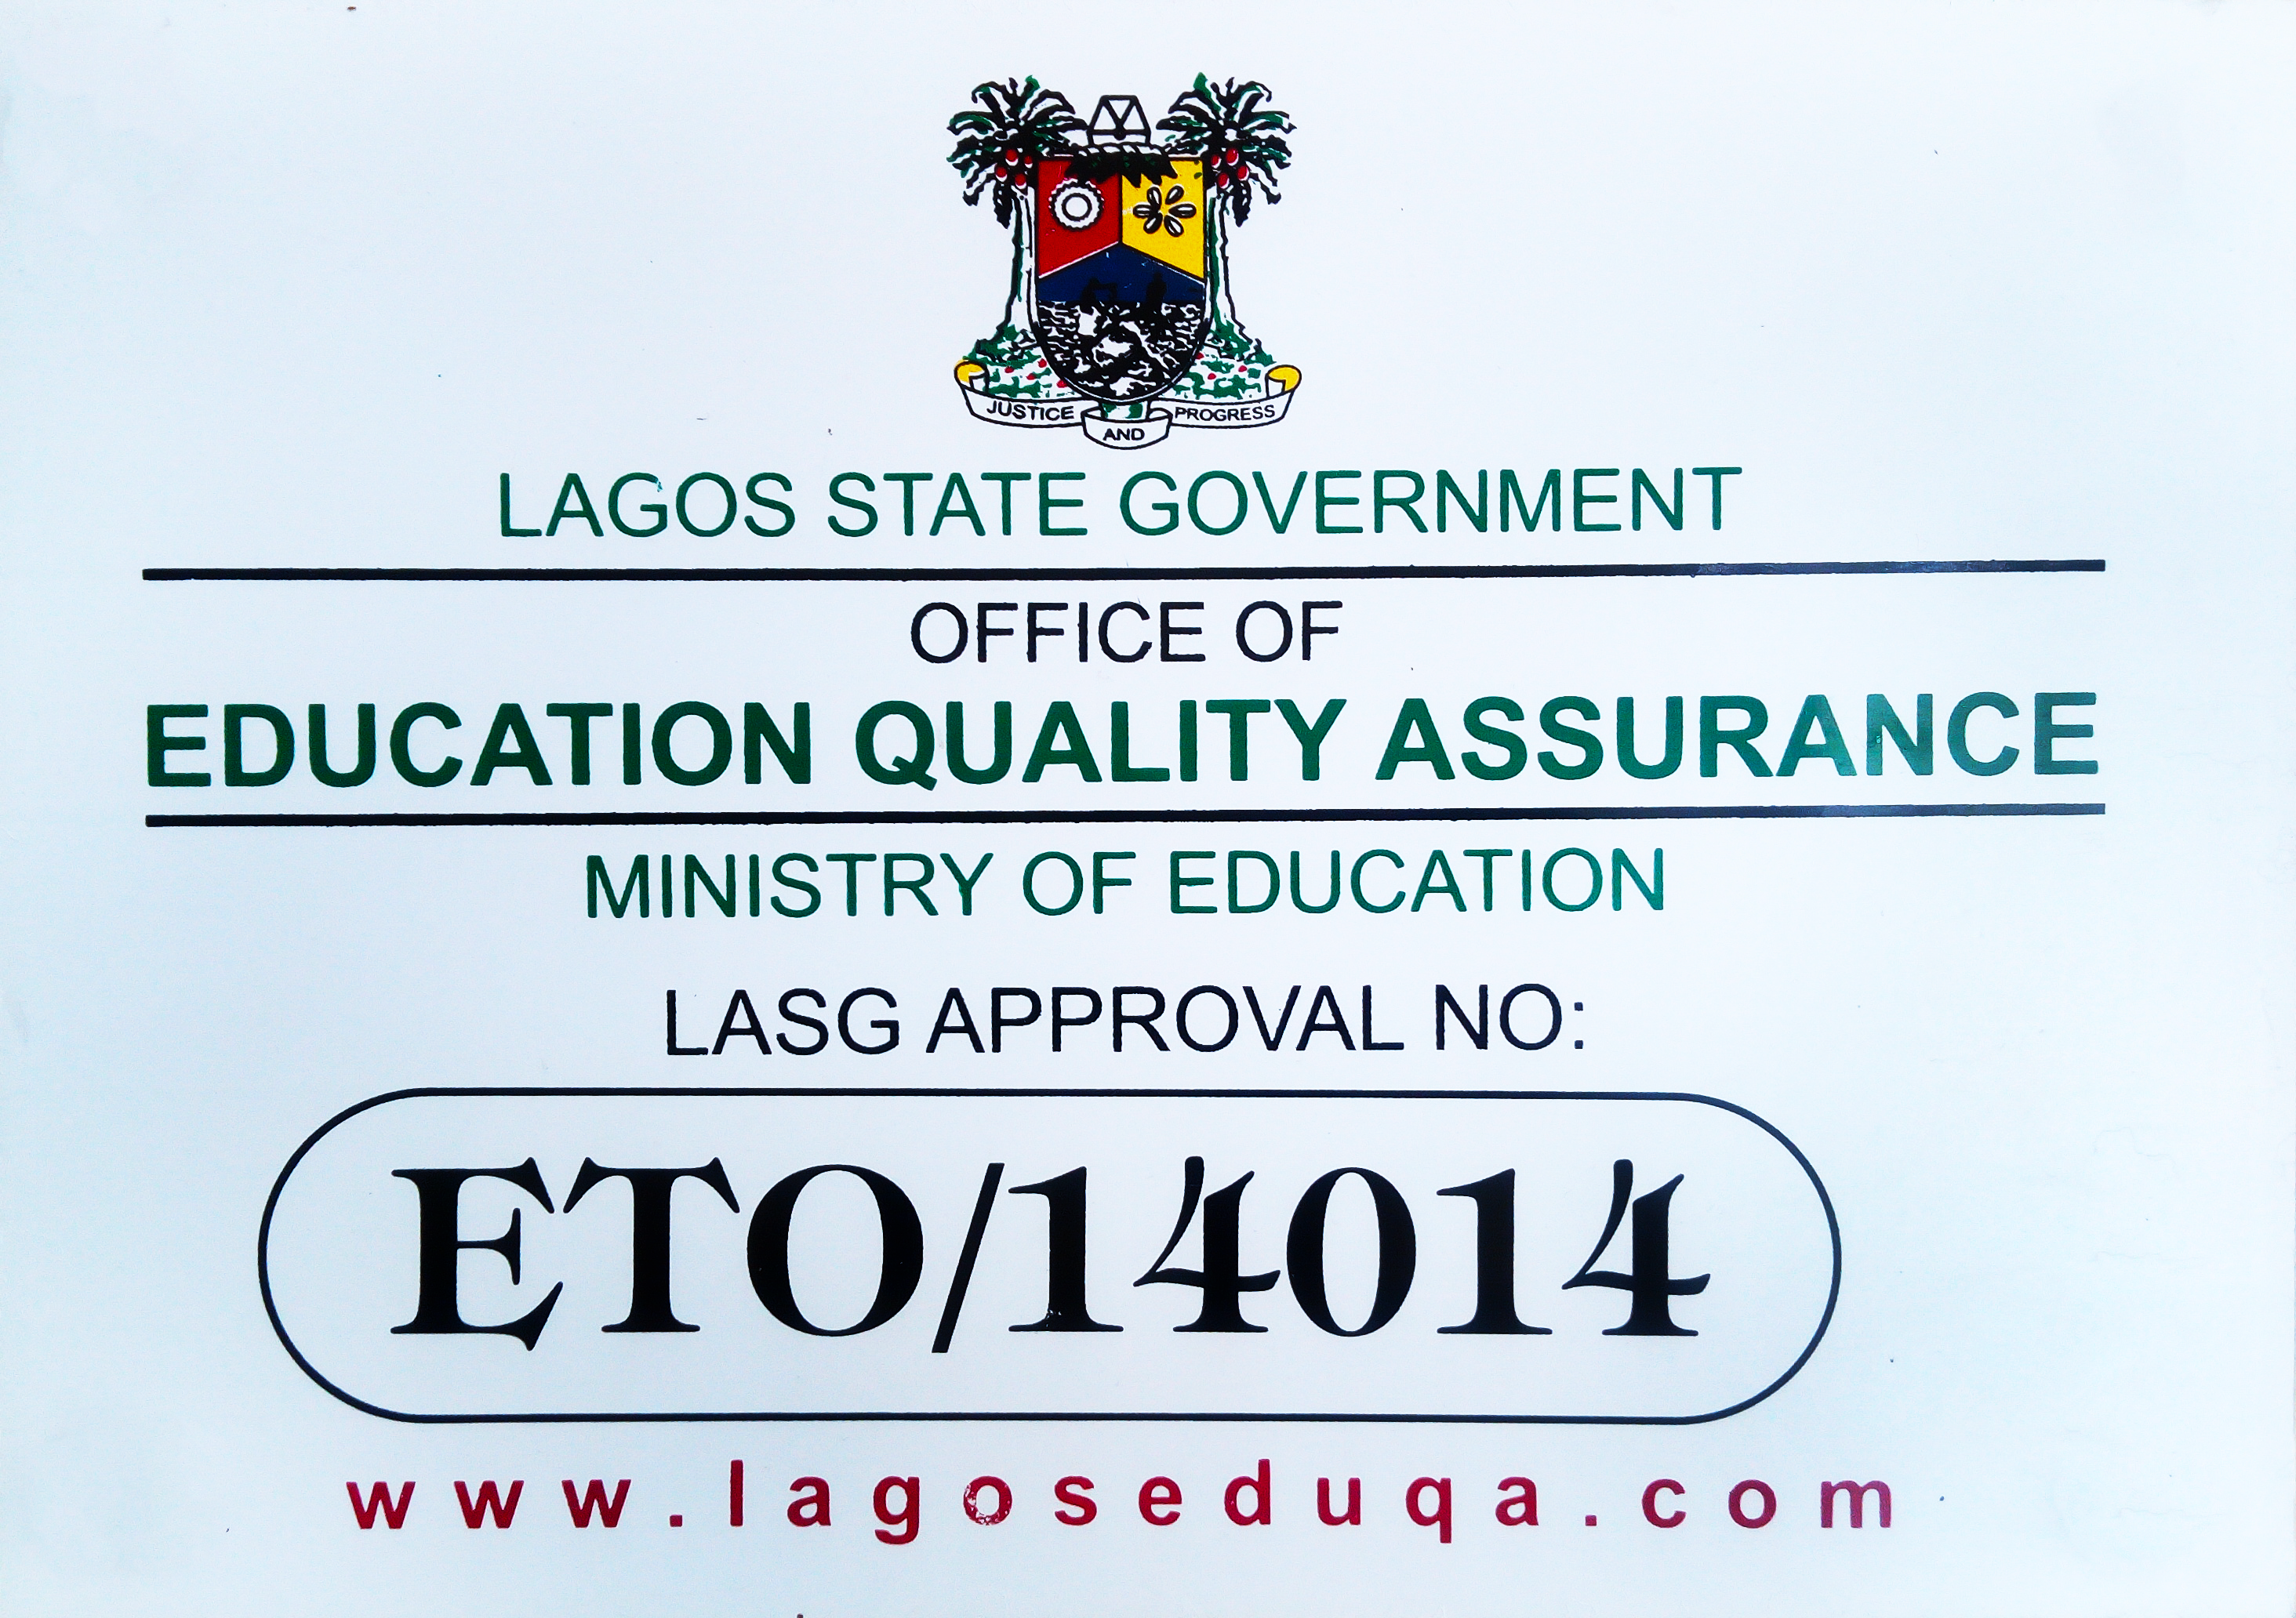 Education Quality Assurance